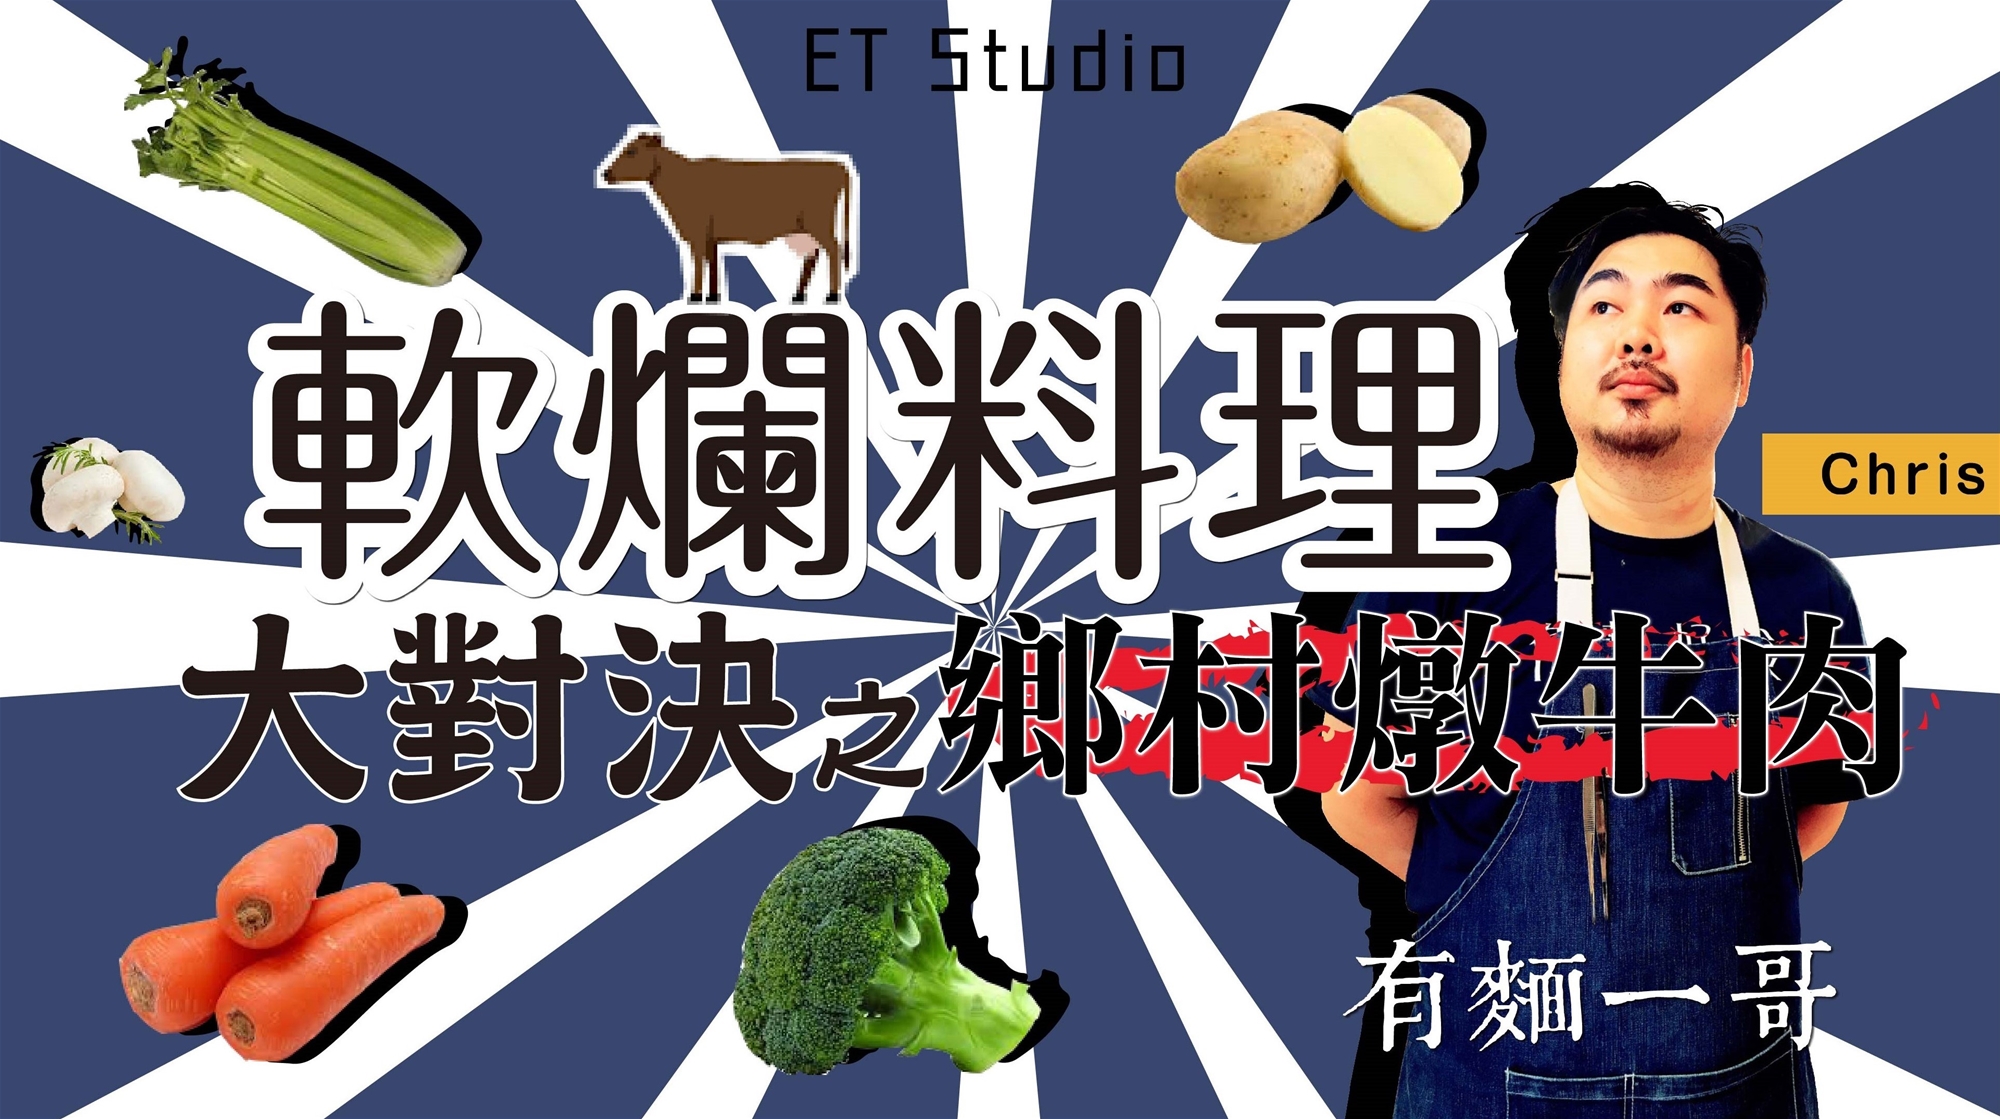 ET Studio │軟爛大對決 第二彈 鄉村燉牛肉